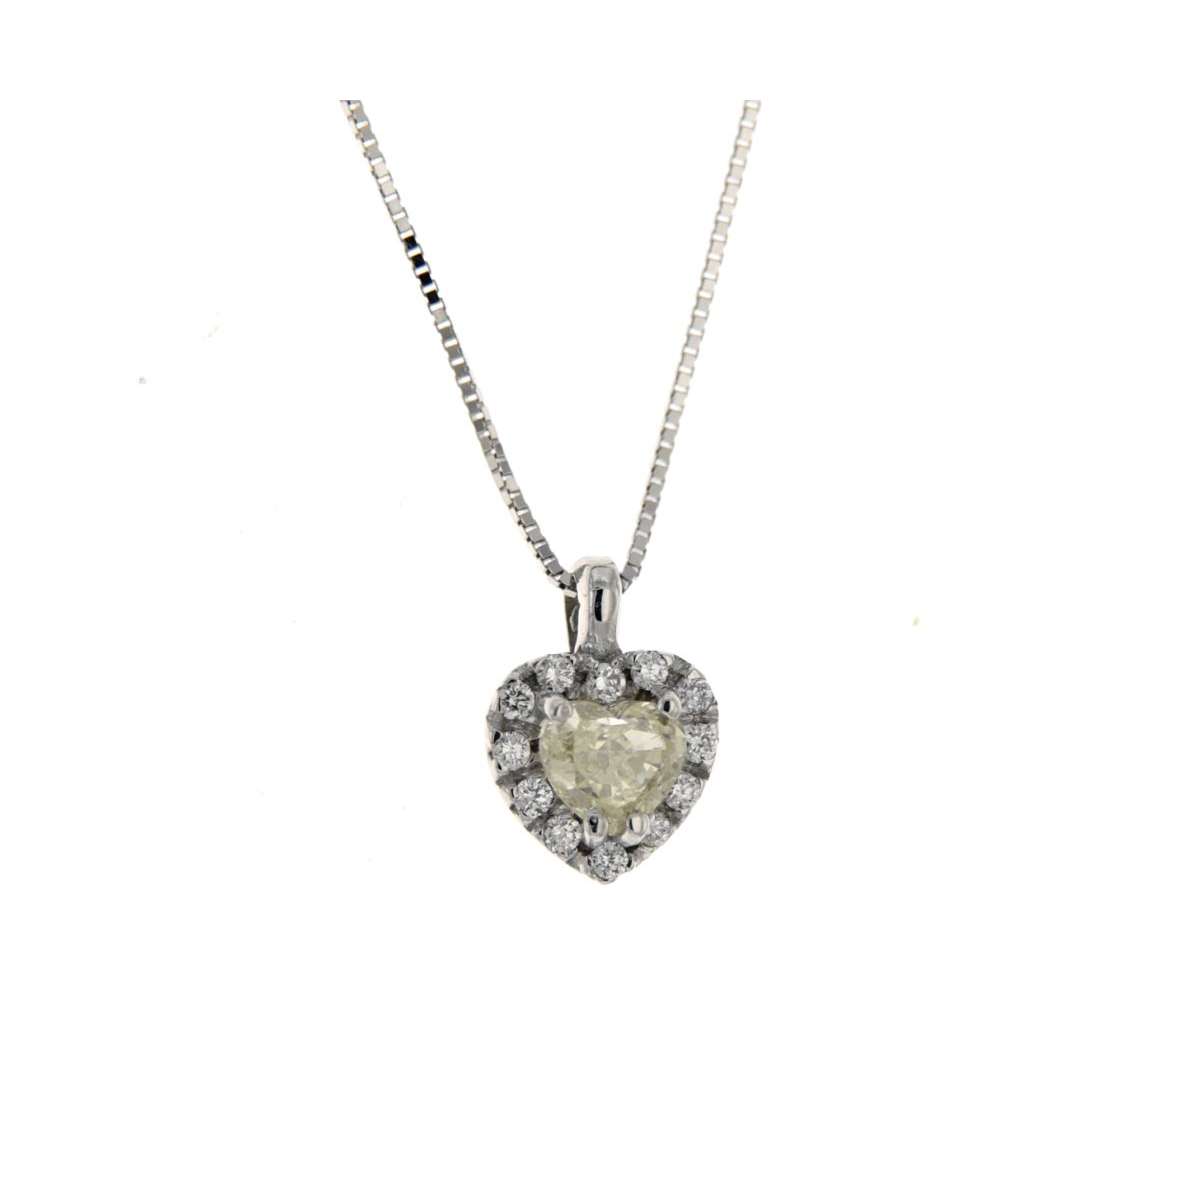 White diamond necklace 0.09 carats g-vs1 FY-VS2 heart cut diamond 0.36 carats